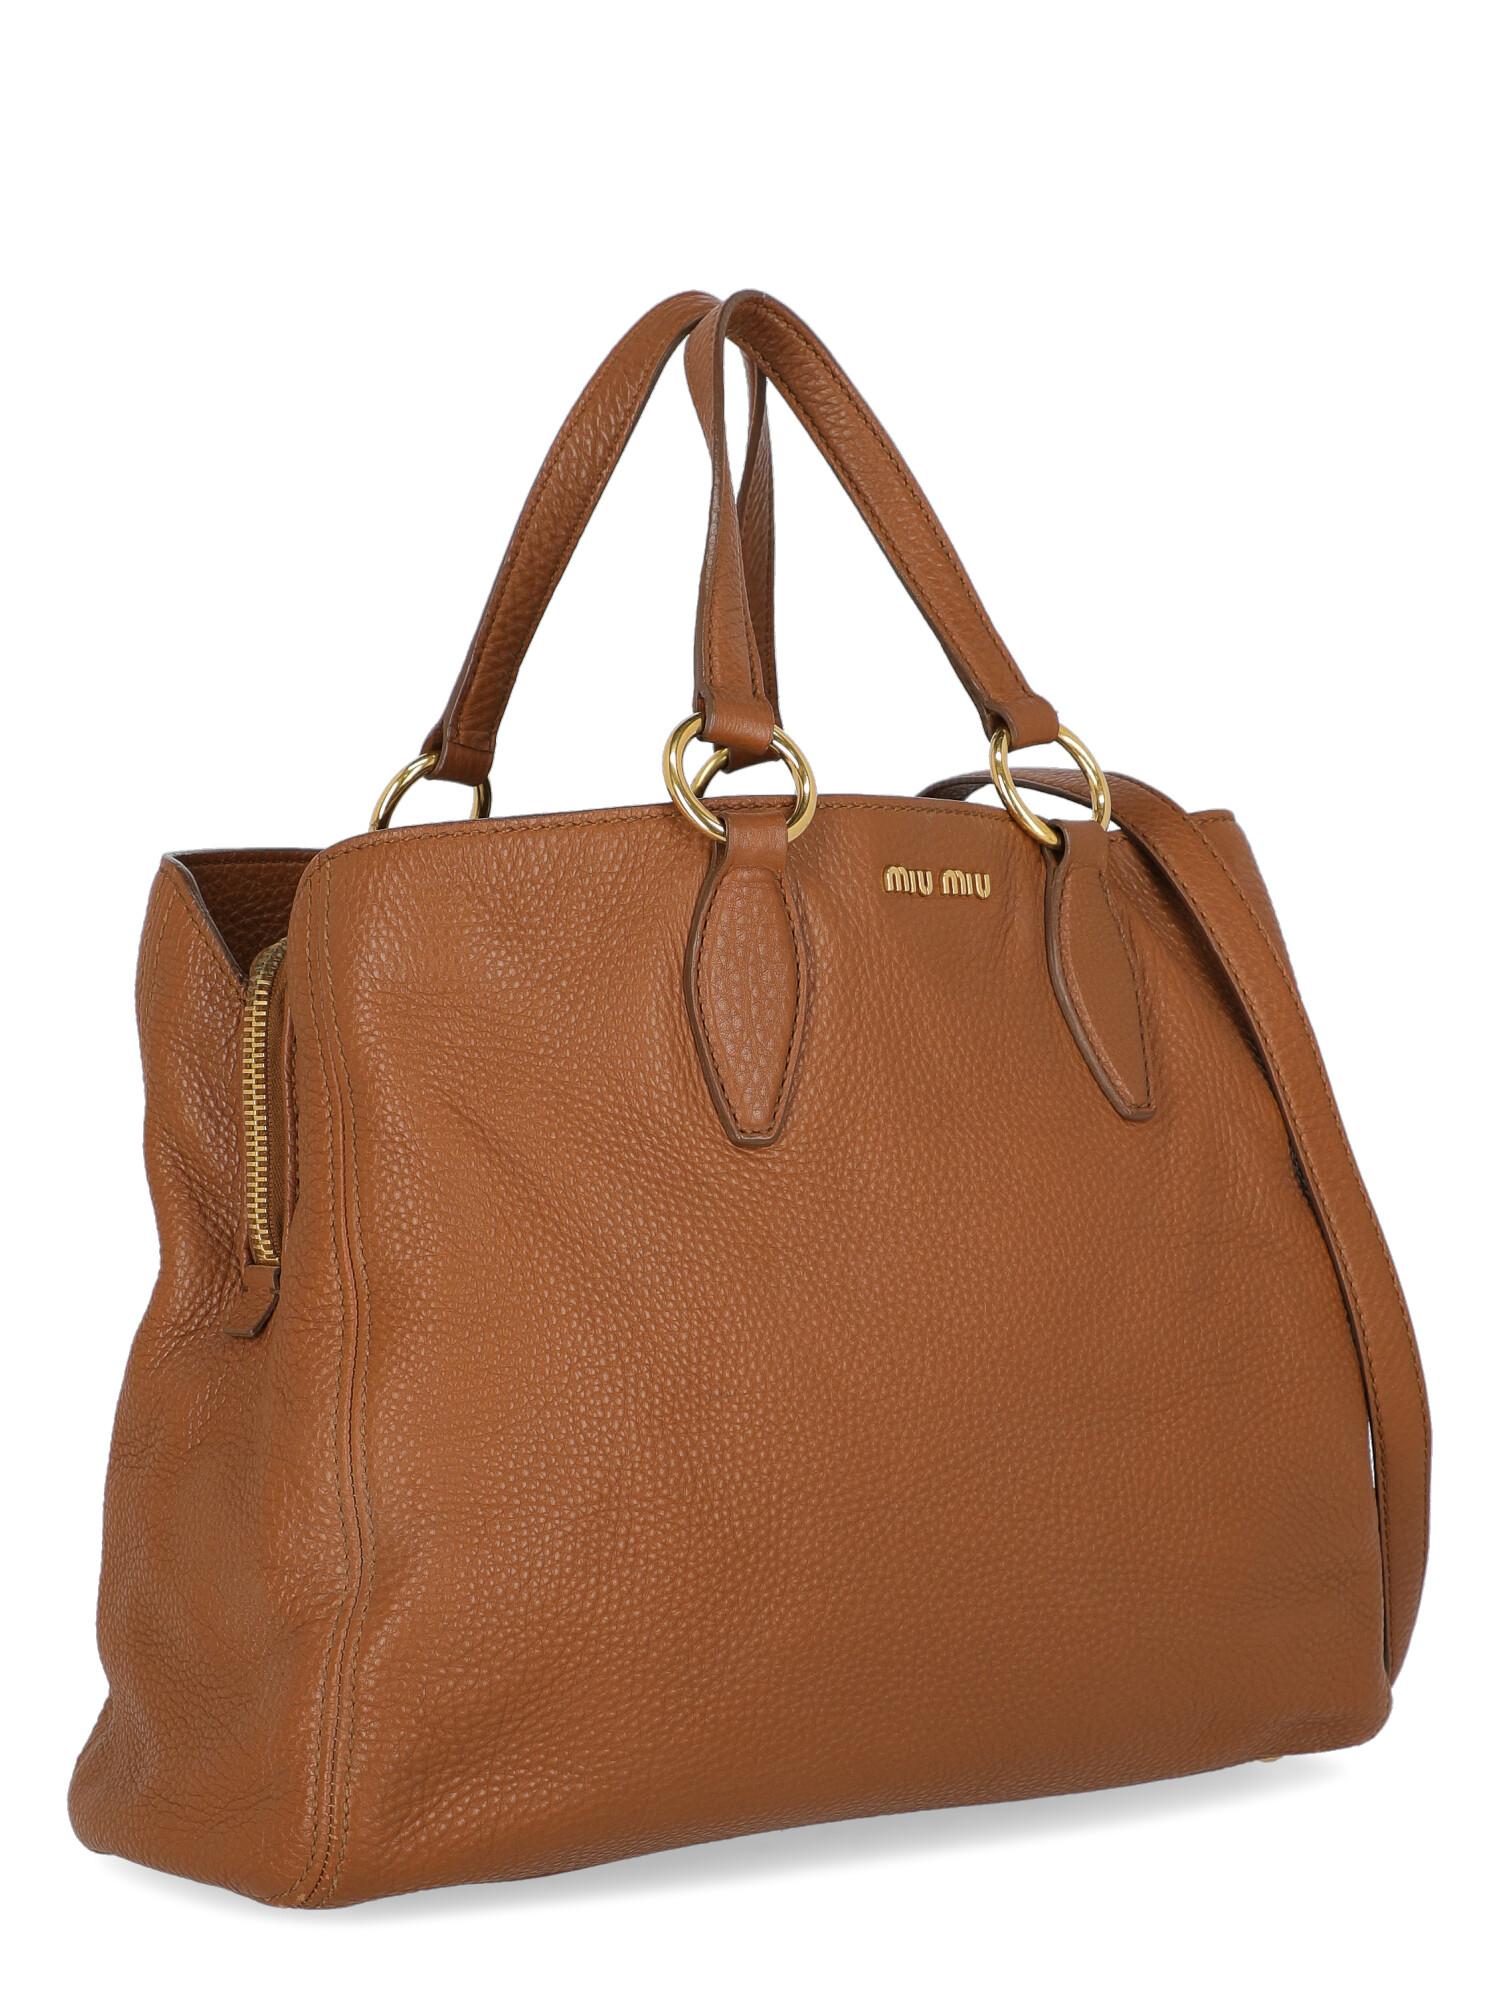 Miu Miu  Women   Handbags  Brown Leather  In Good Condition For Sale In Milan, IT